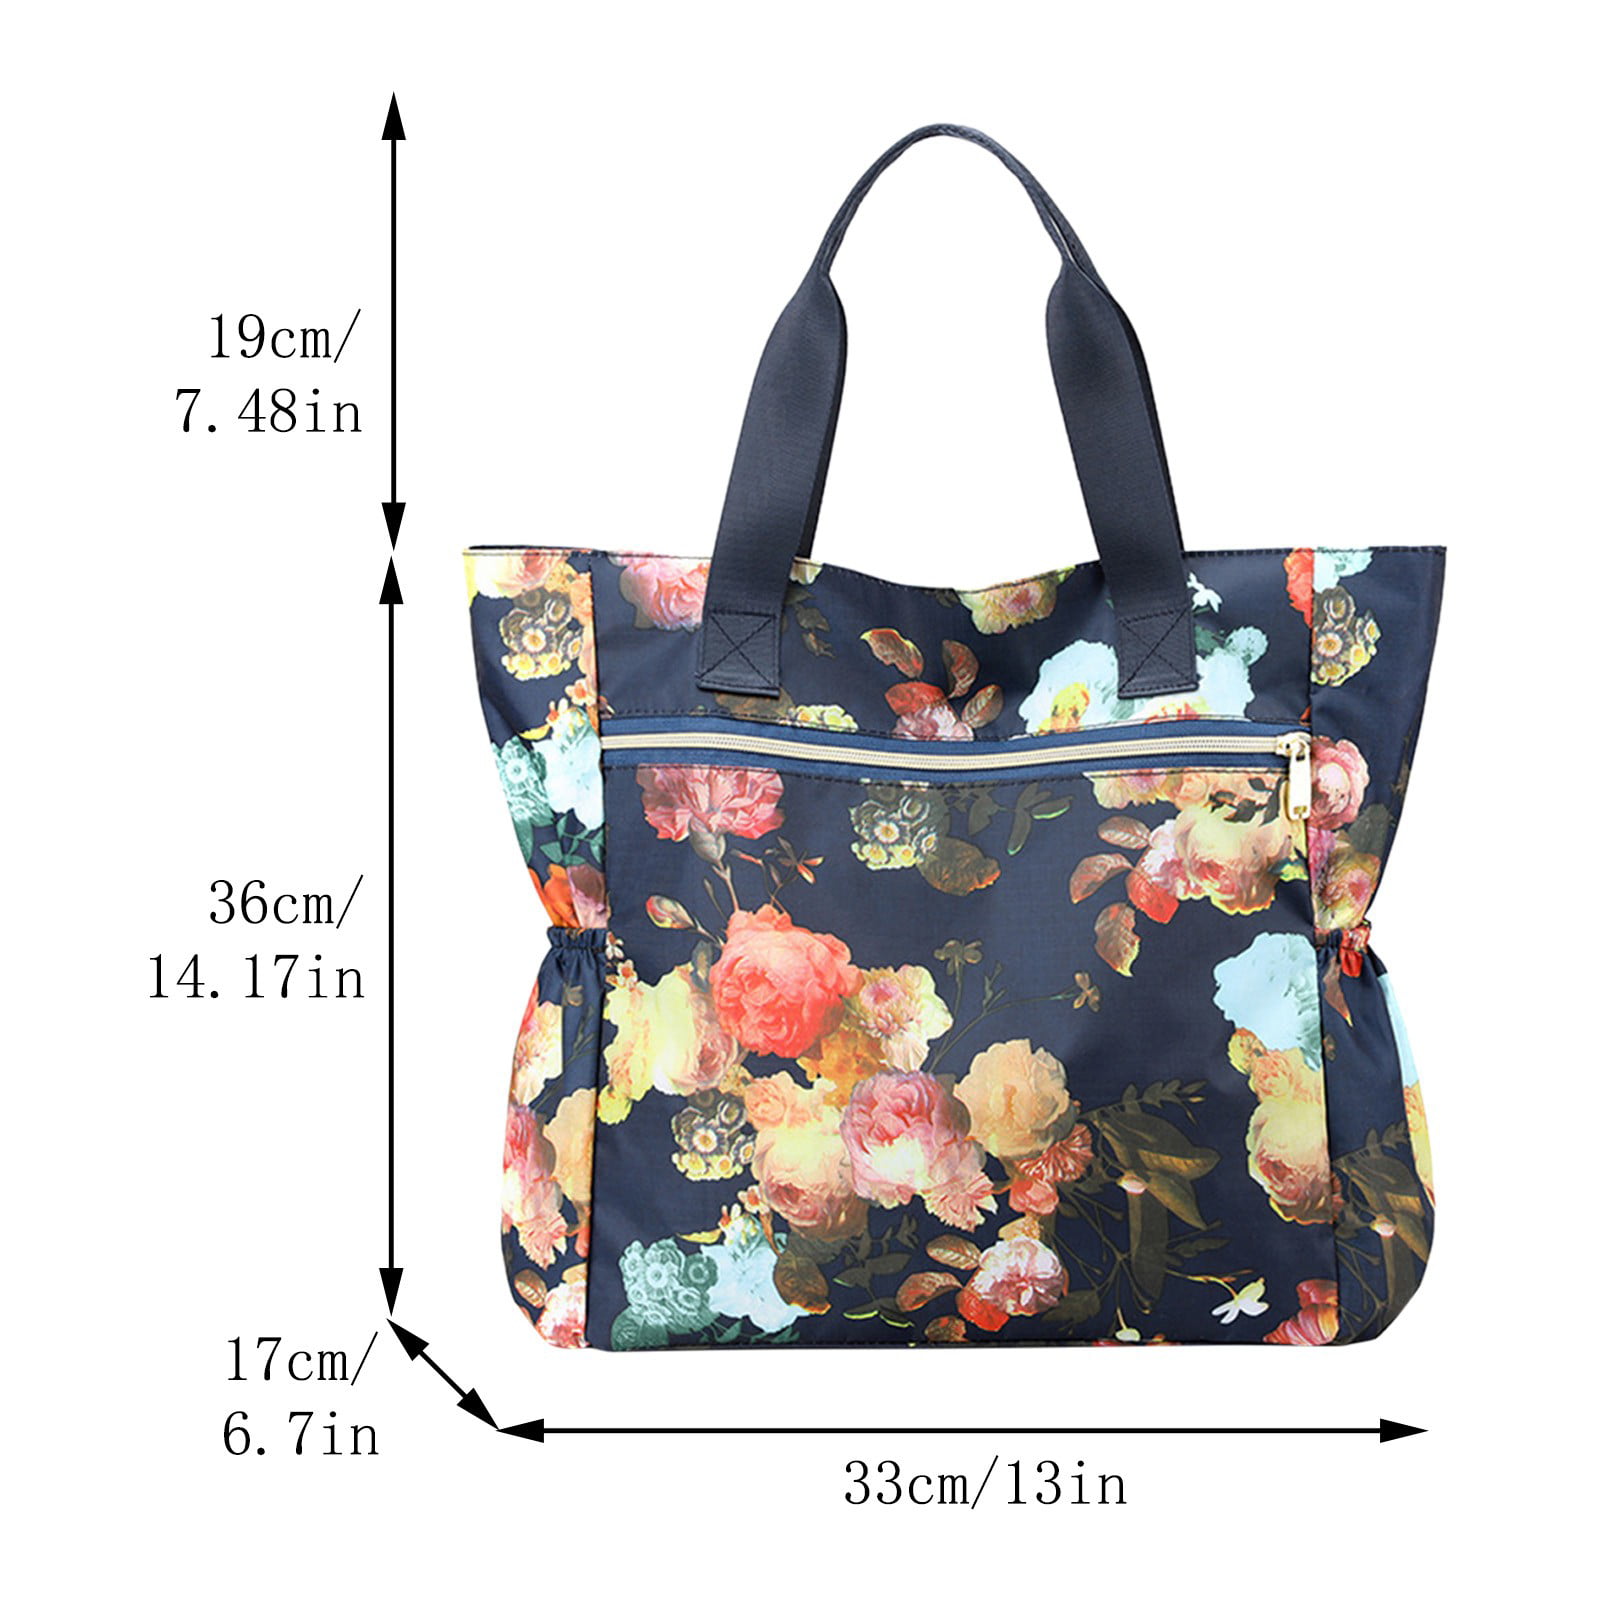 Dooney & Bourke floral print handbag w/ removable strap $79.99 | Bags,  Beautiful bags, Printed handbags